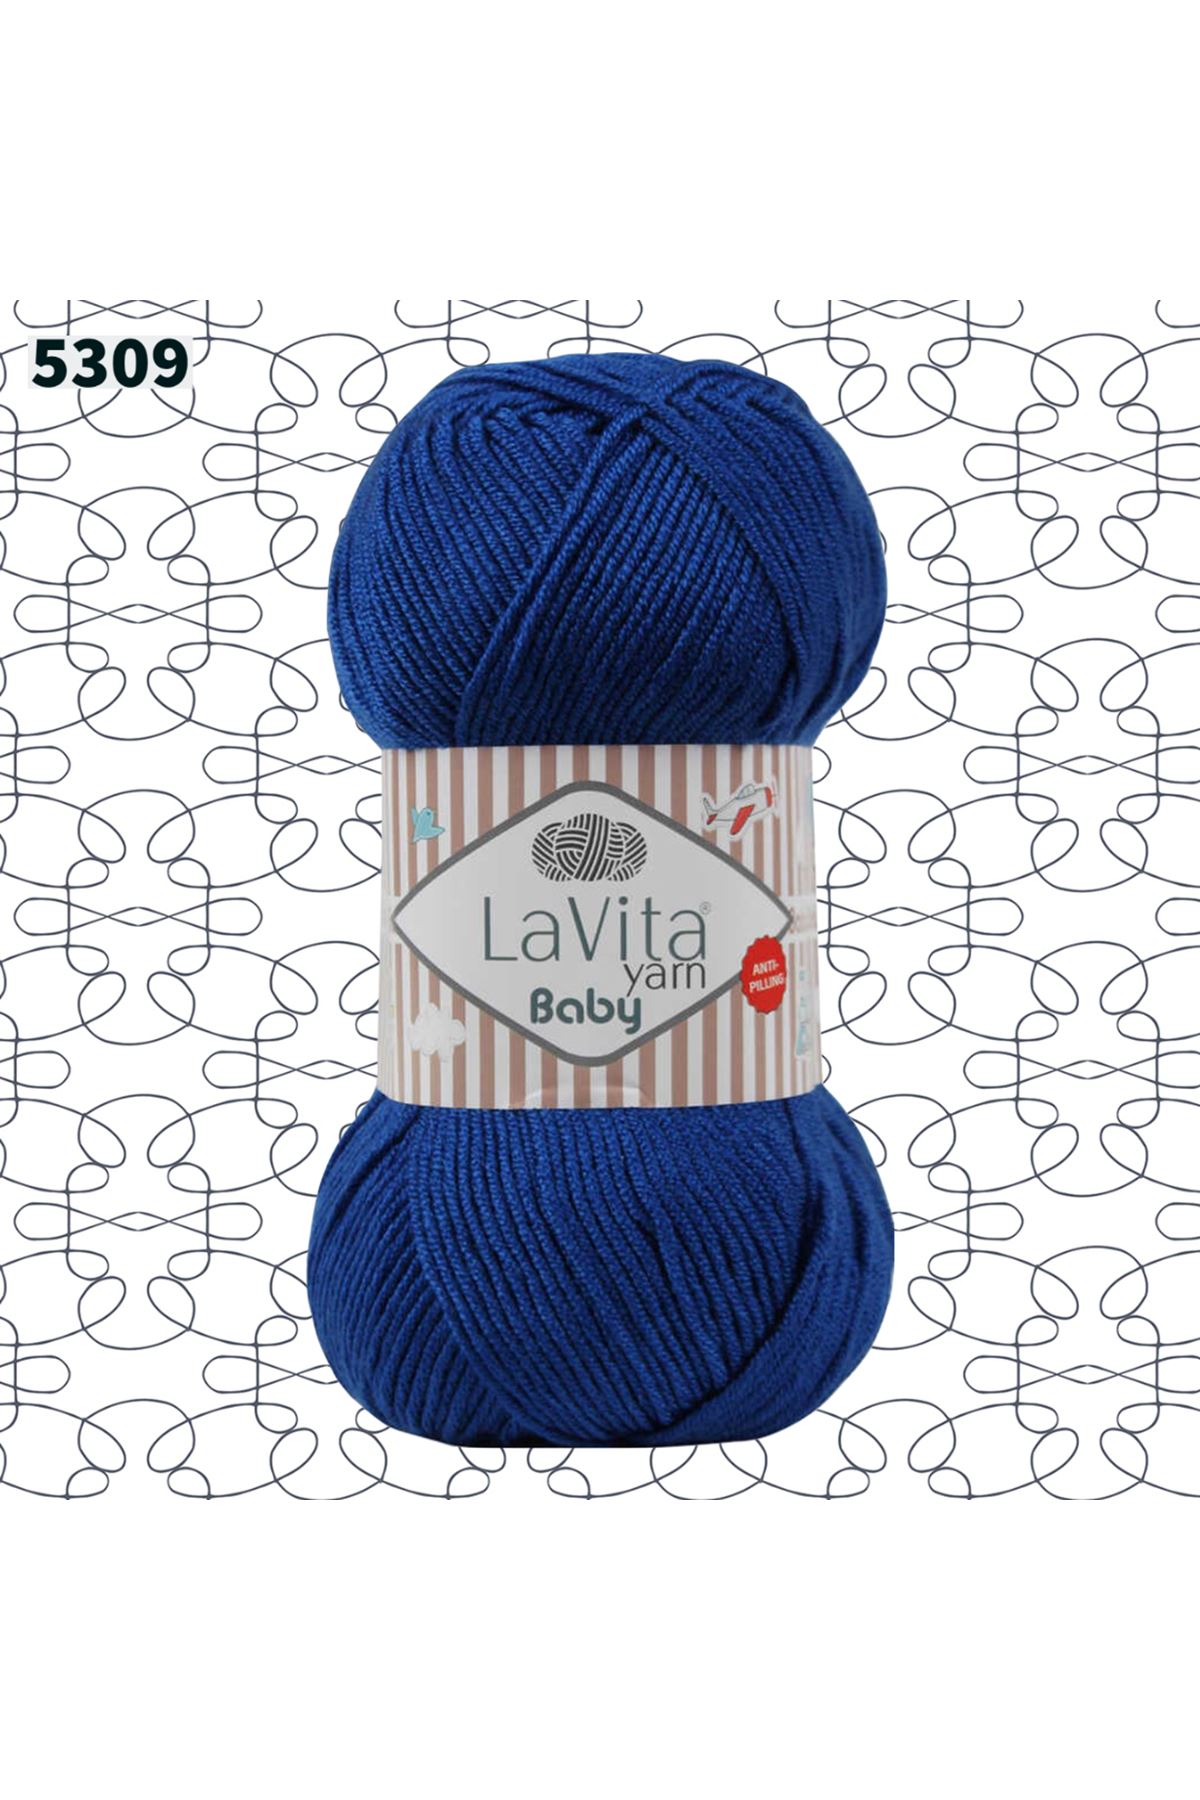 Lavita Baby - 5309 Çivit Mavi